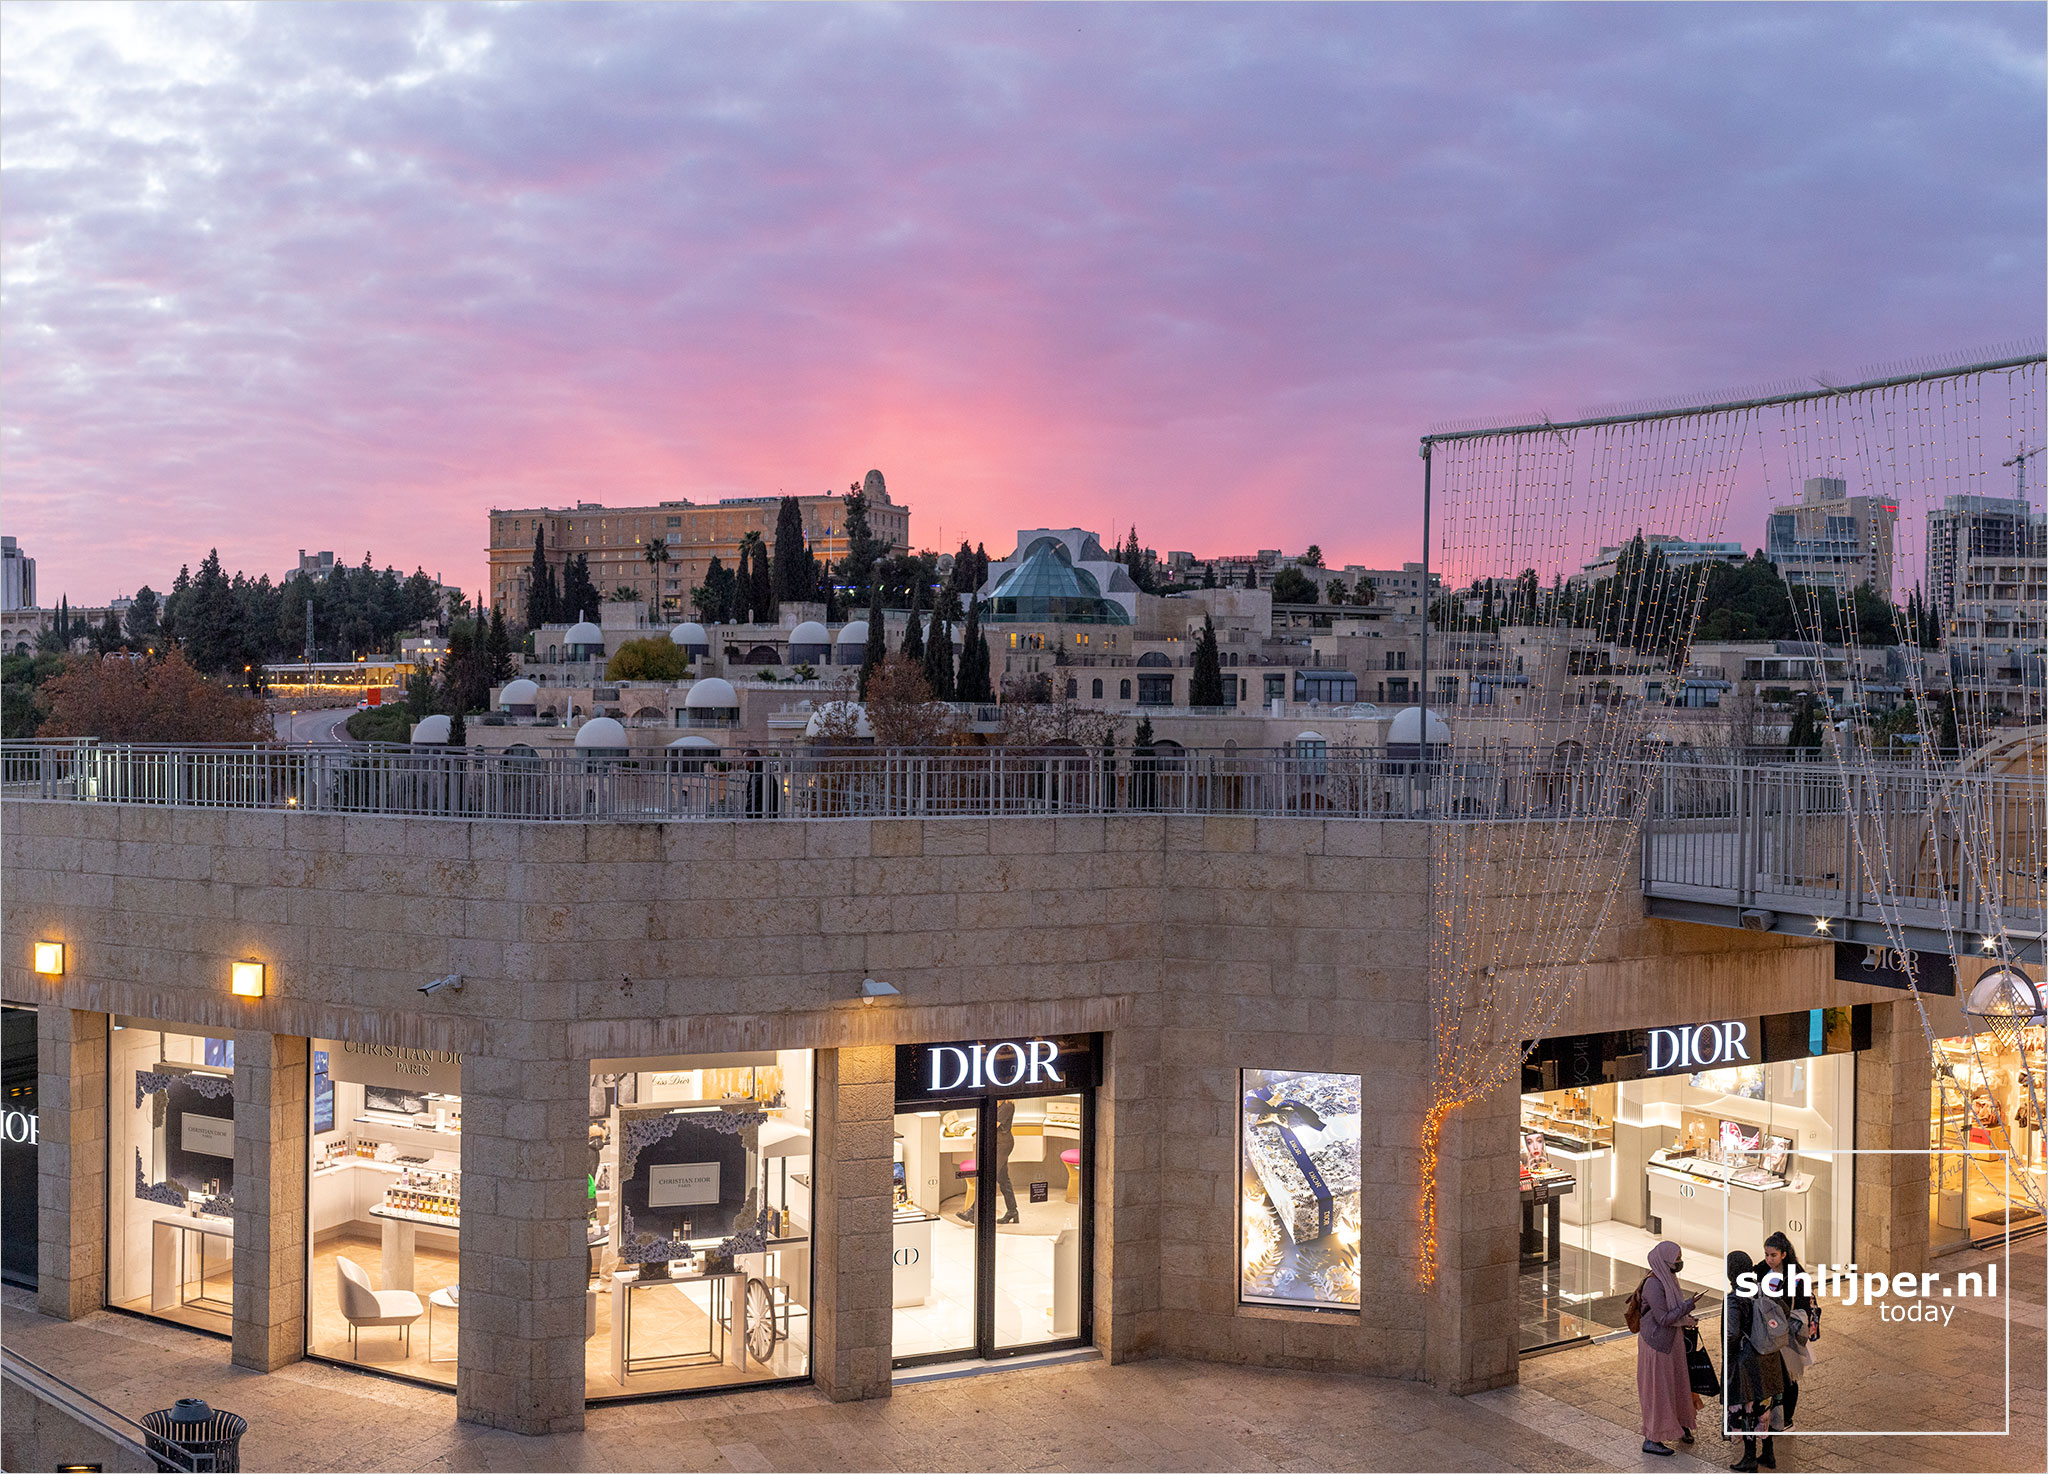 Israel, Jerusalem, 13 januari 2022